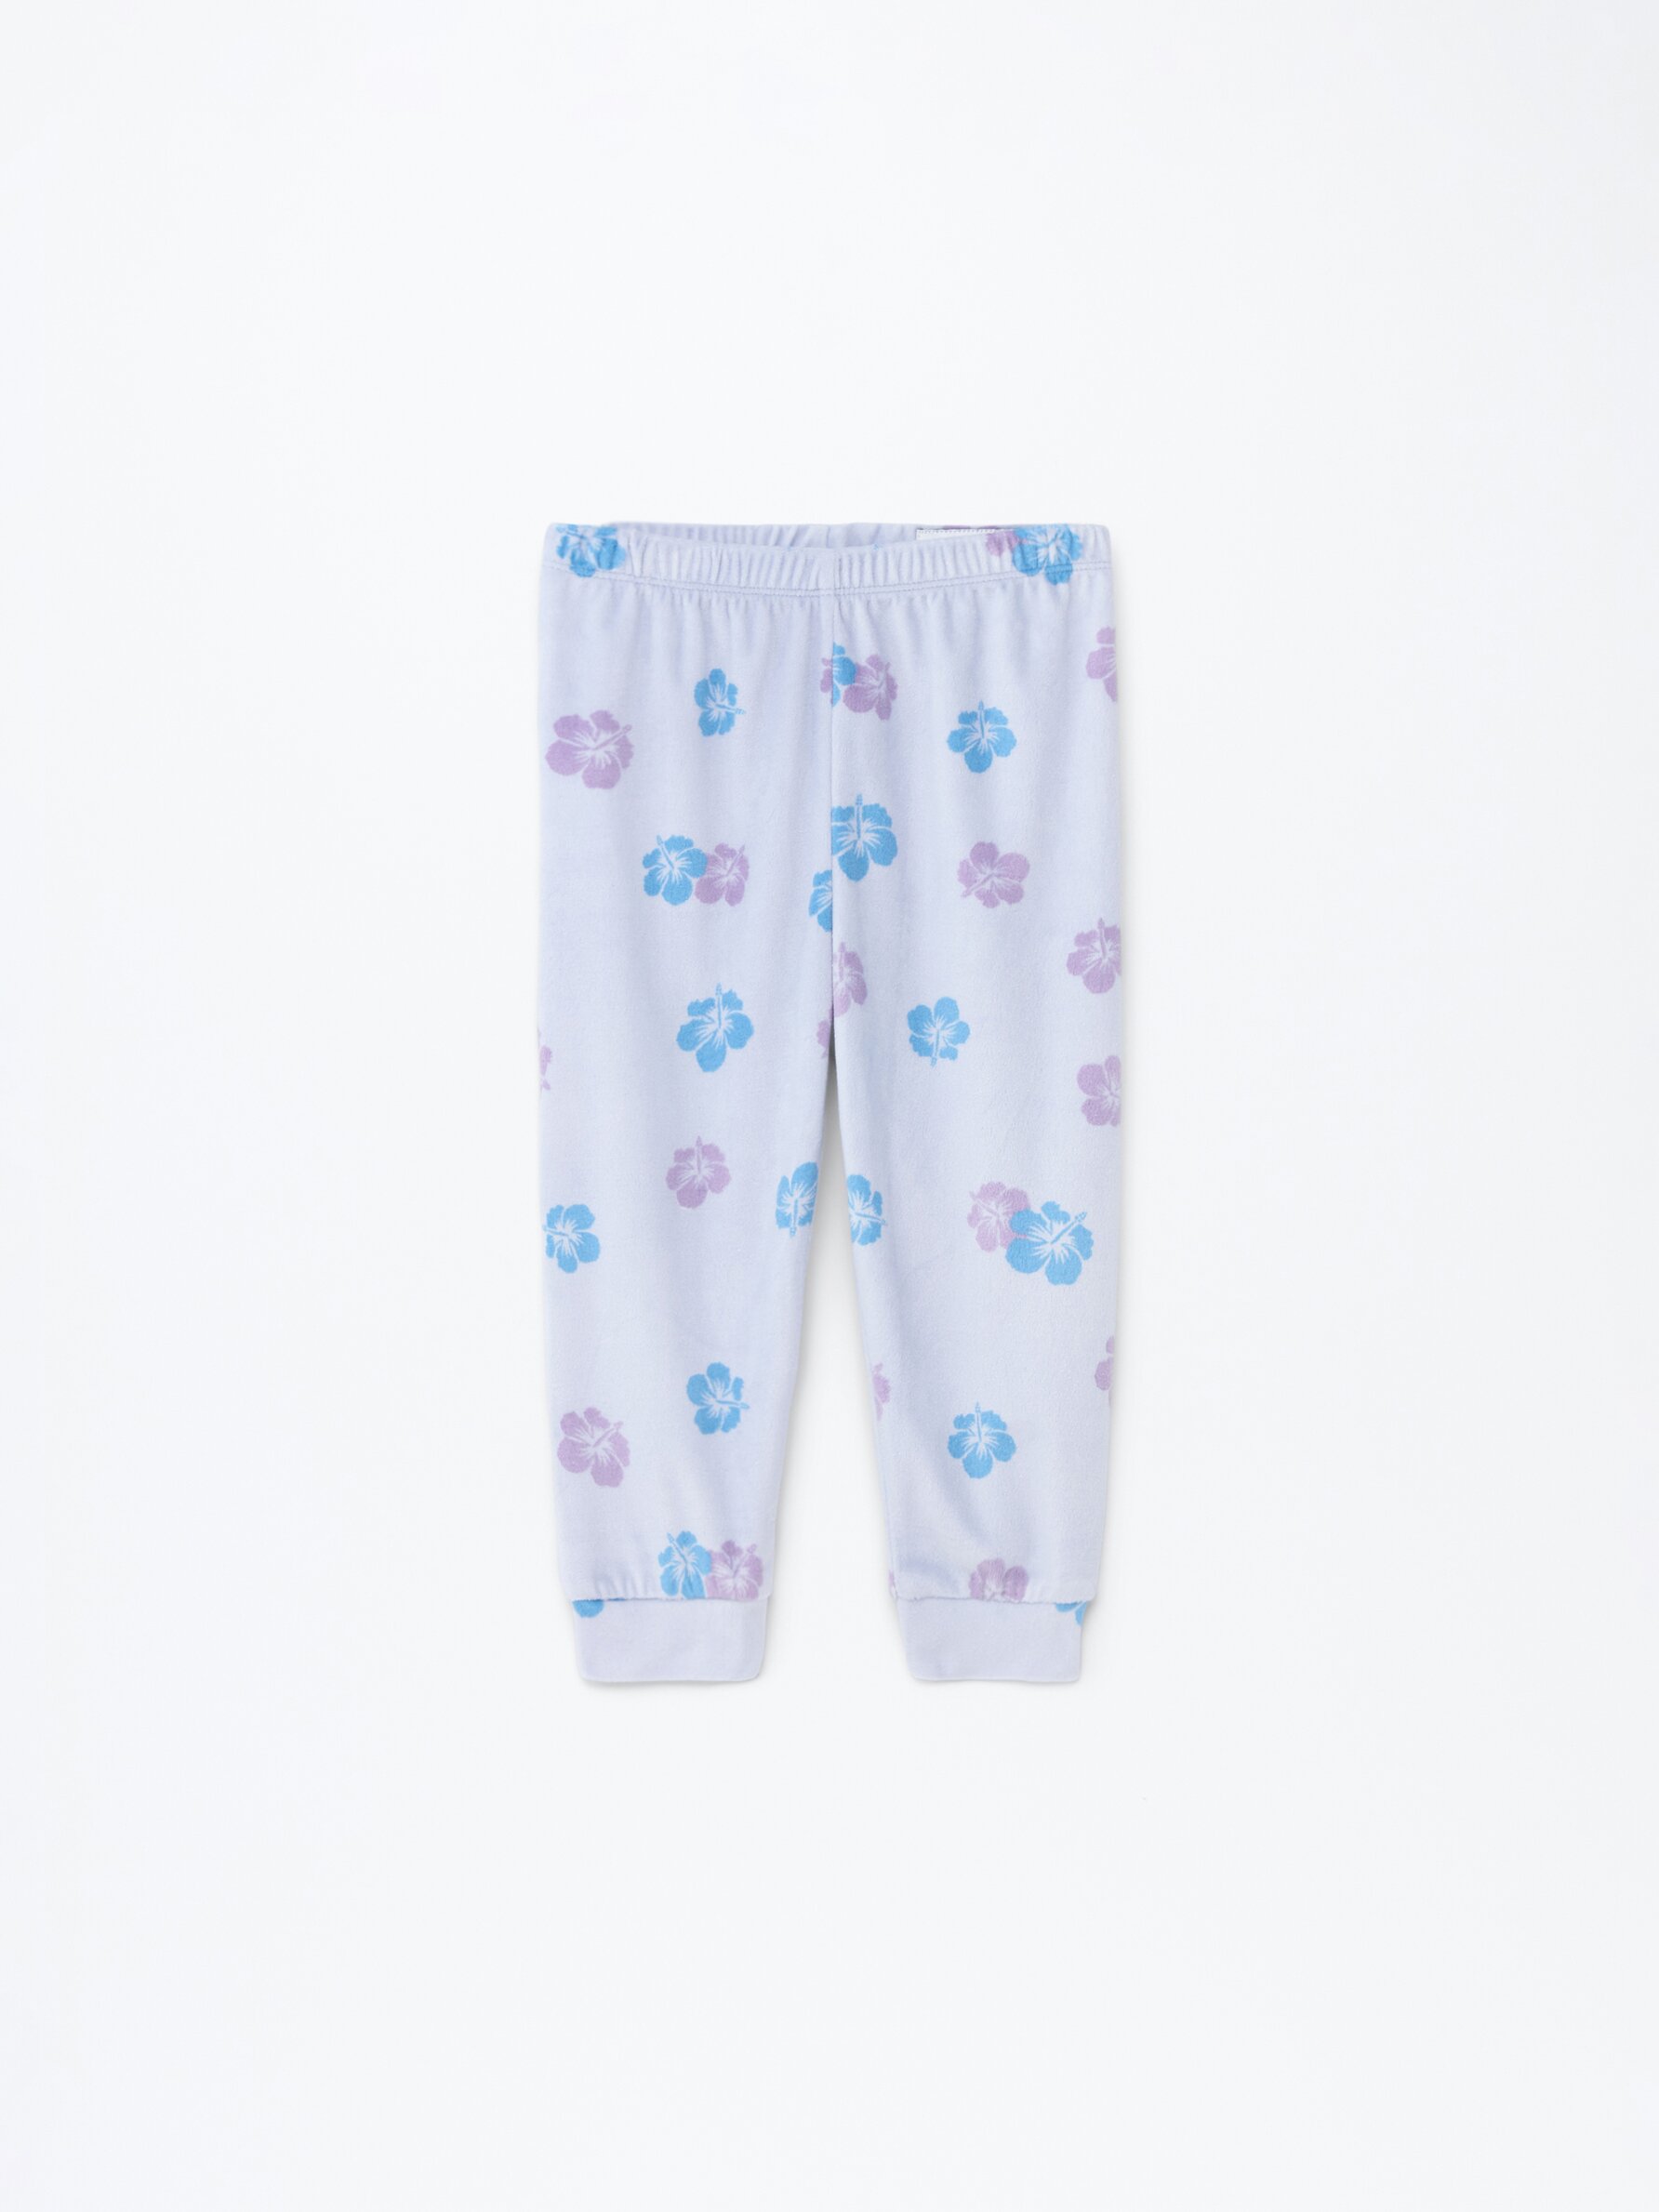 Pijama aterciopelado estampado Lilo & Stitch ©Disney